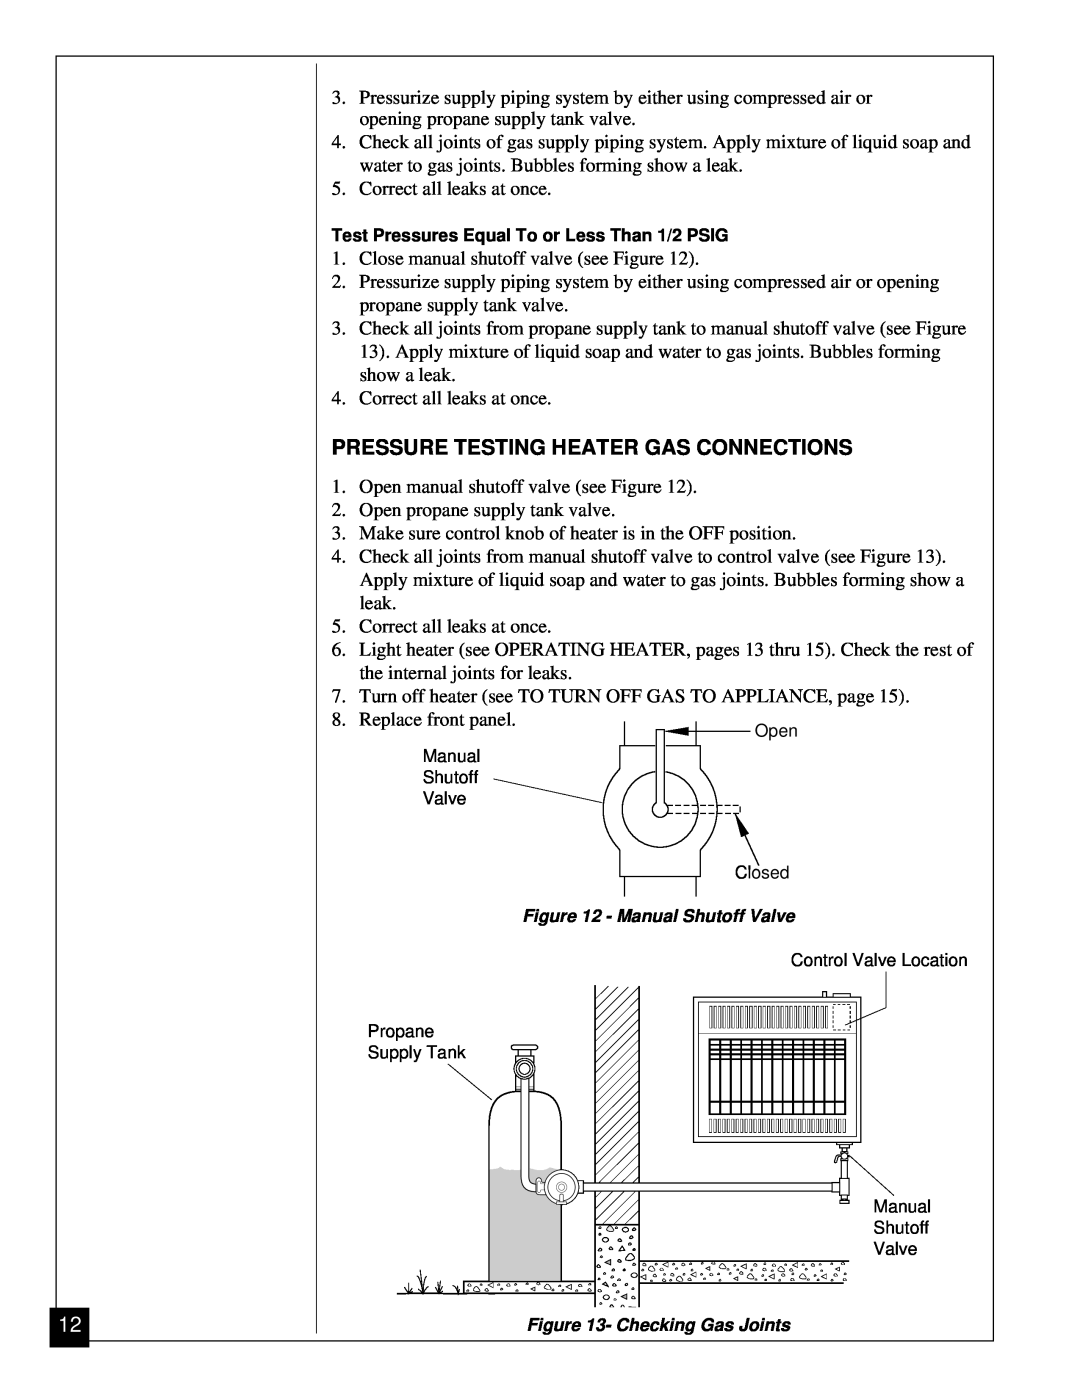 Desa VGP30 installation manual Pressure Testing Heater Gas Connections 